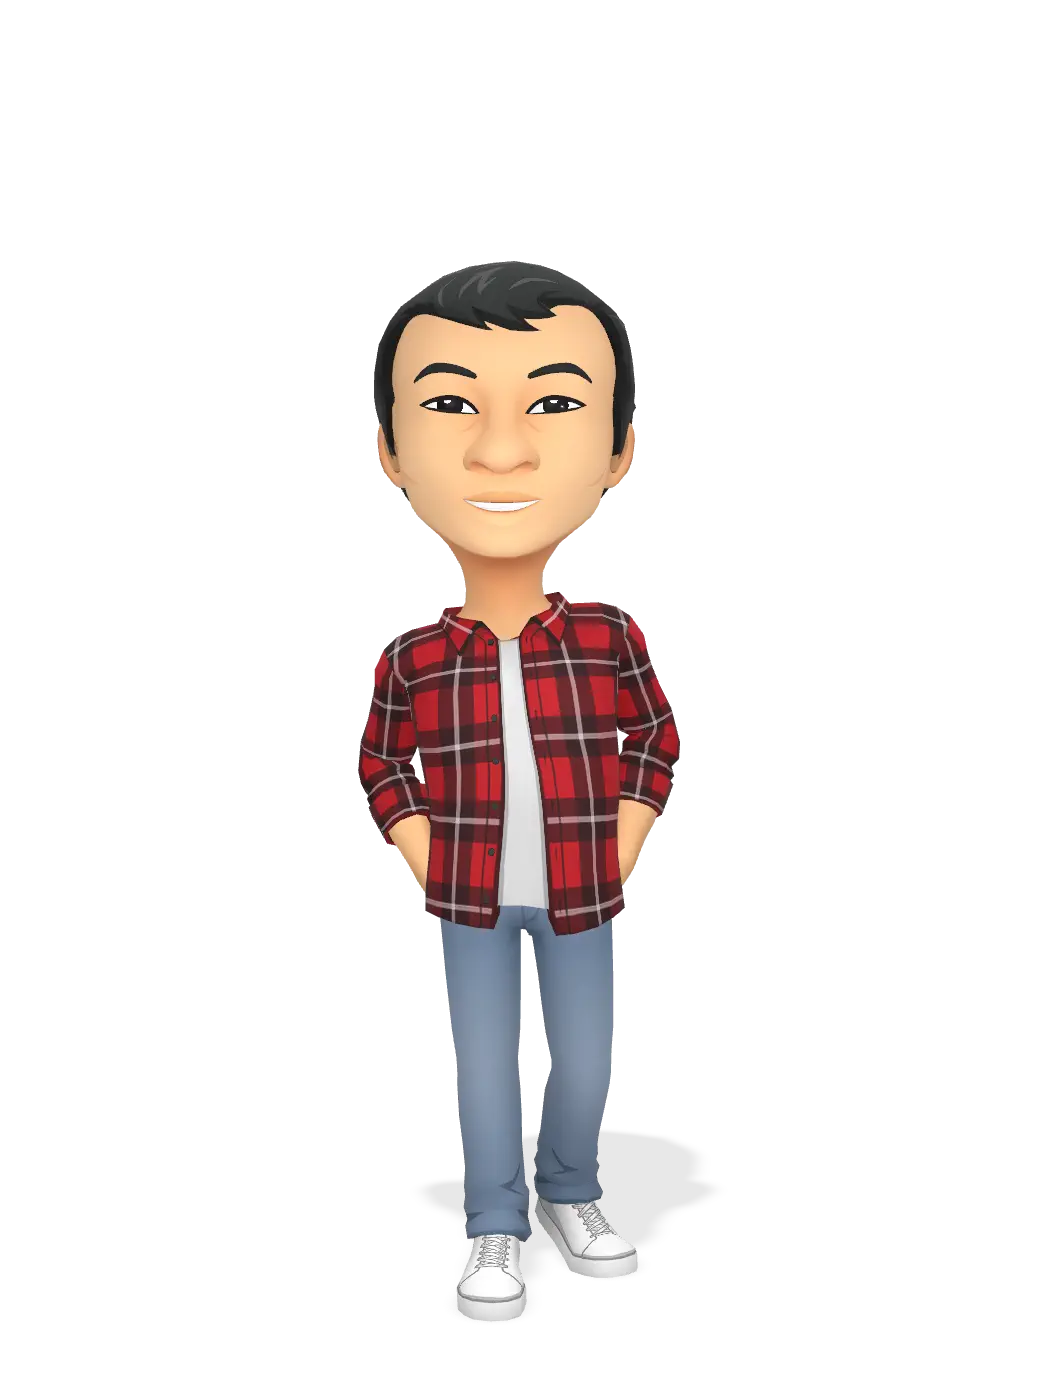 3D Bitmoji for kinnextrehab avatar